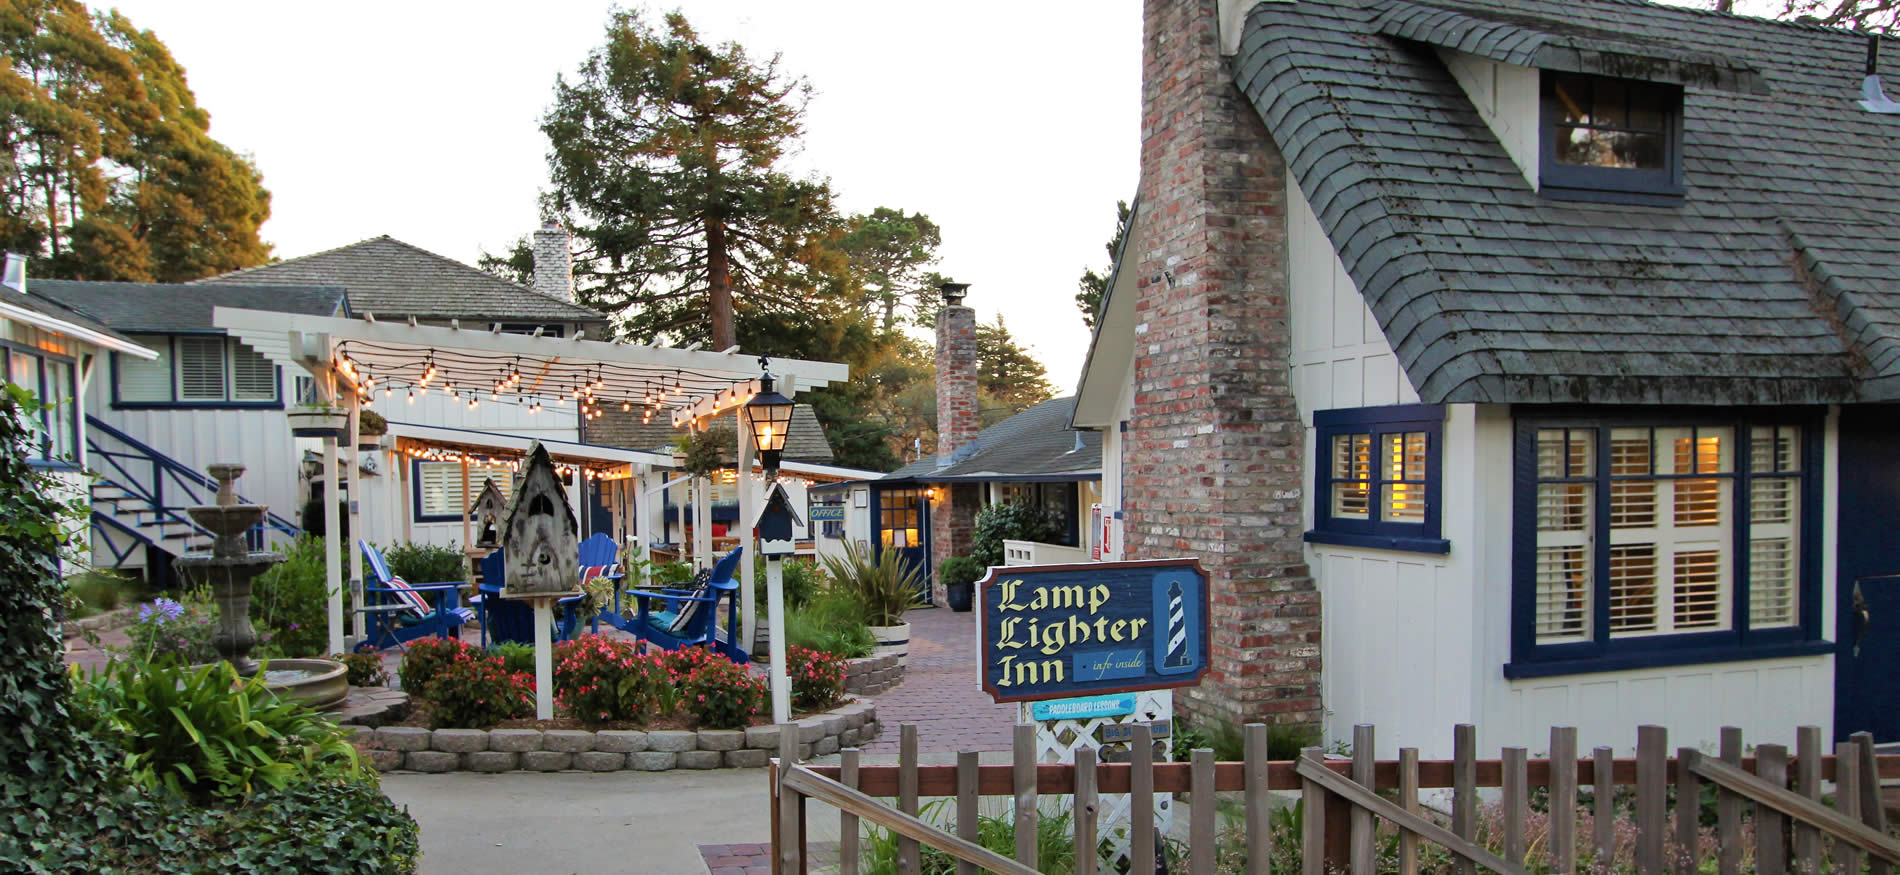 Inns by the Sea - Carmel, CA